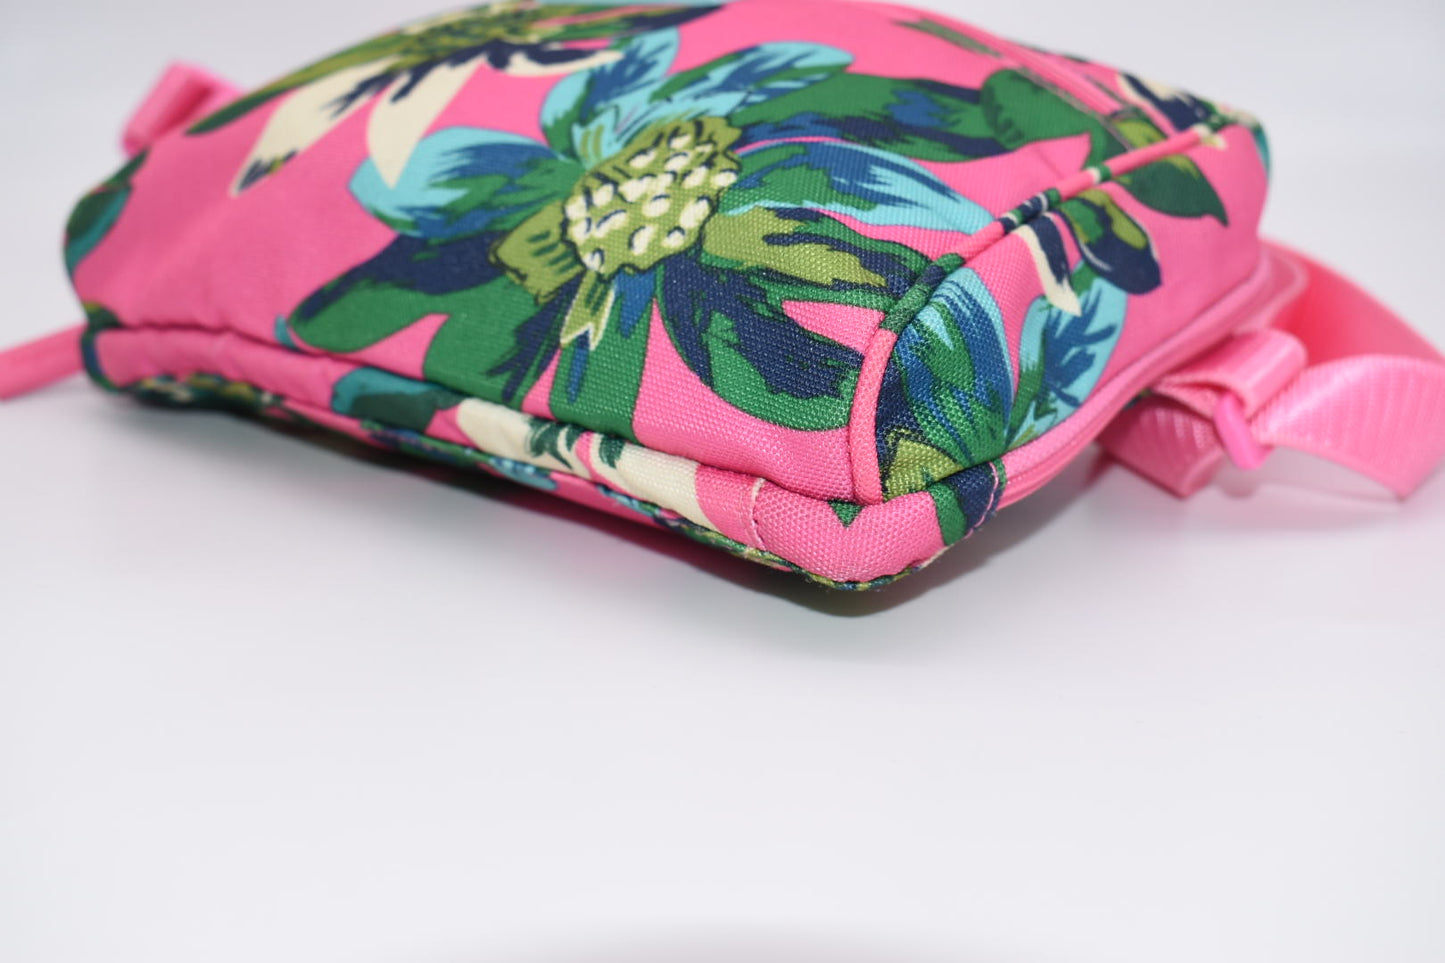 Vera Bradley Lighten Up Belt Bag in "Tropical Paradise" Pattern